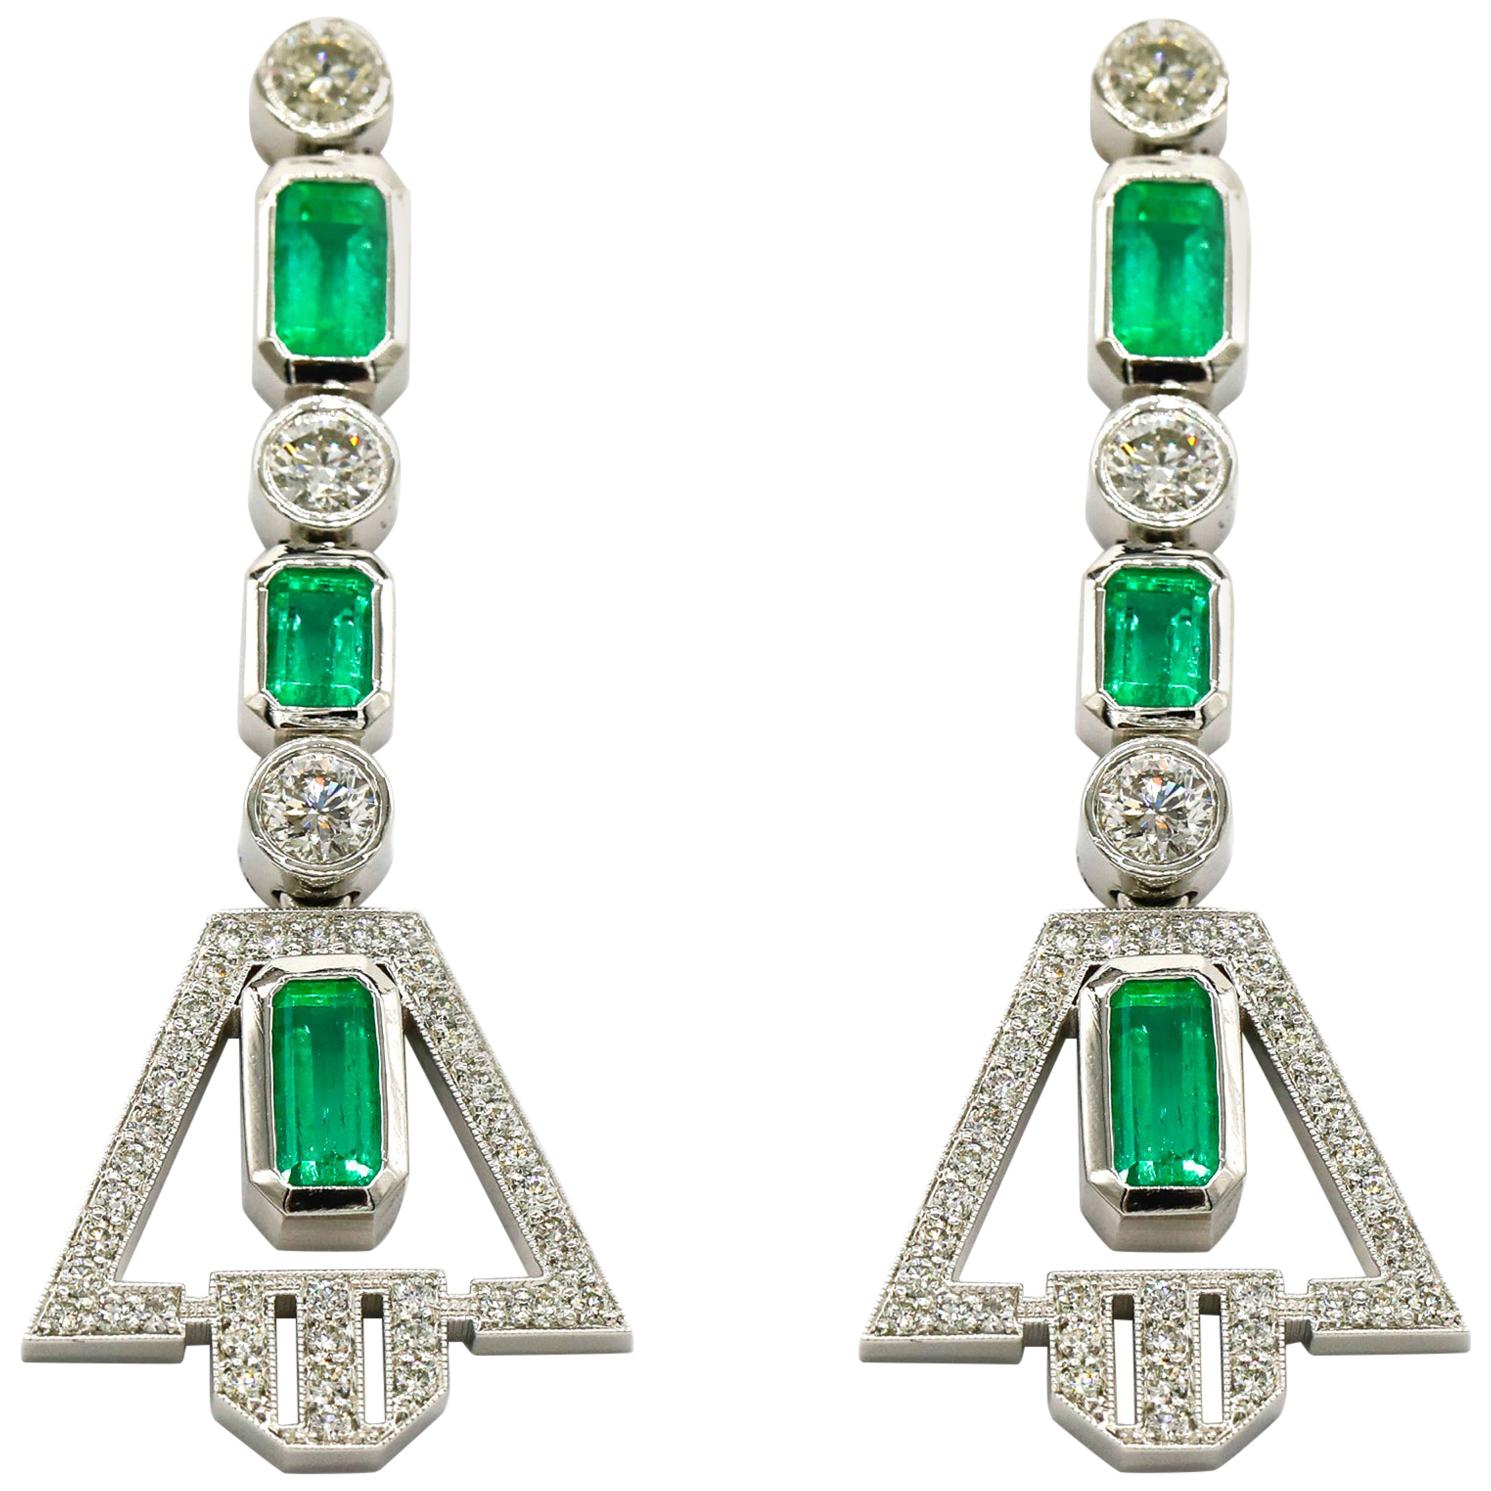 Platinum Round Brilliant Cut VS2 GH Color Diamond and 6 Carat Emerald Earrings For Sale